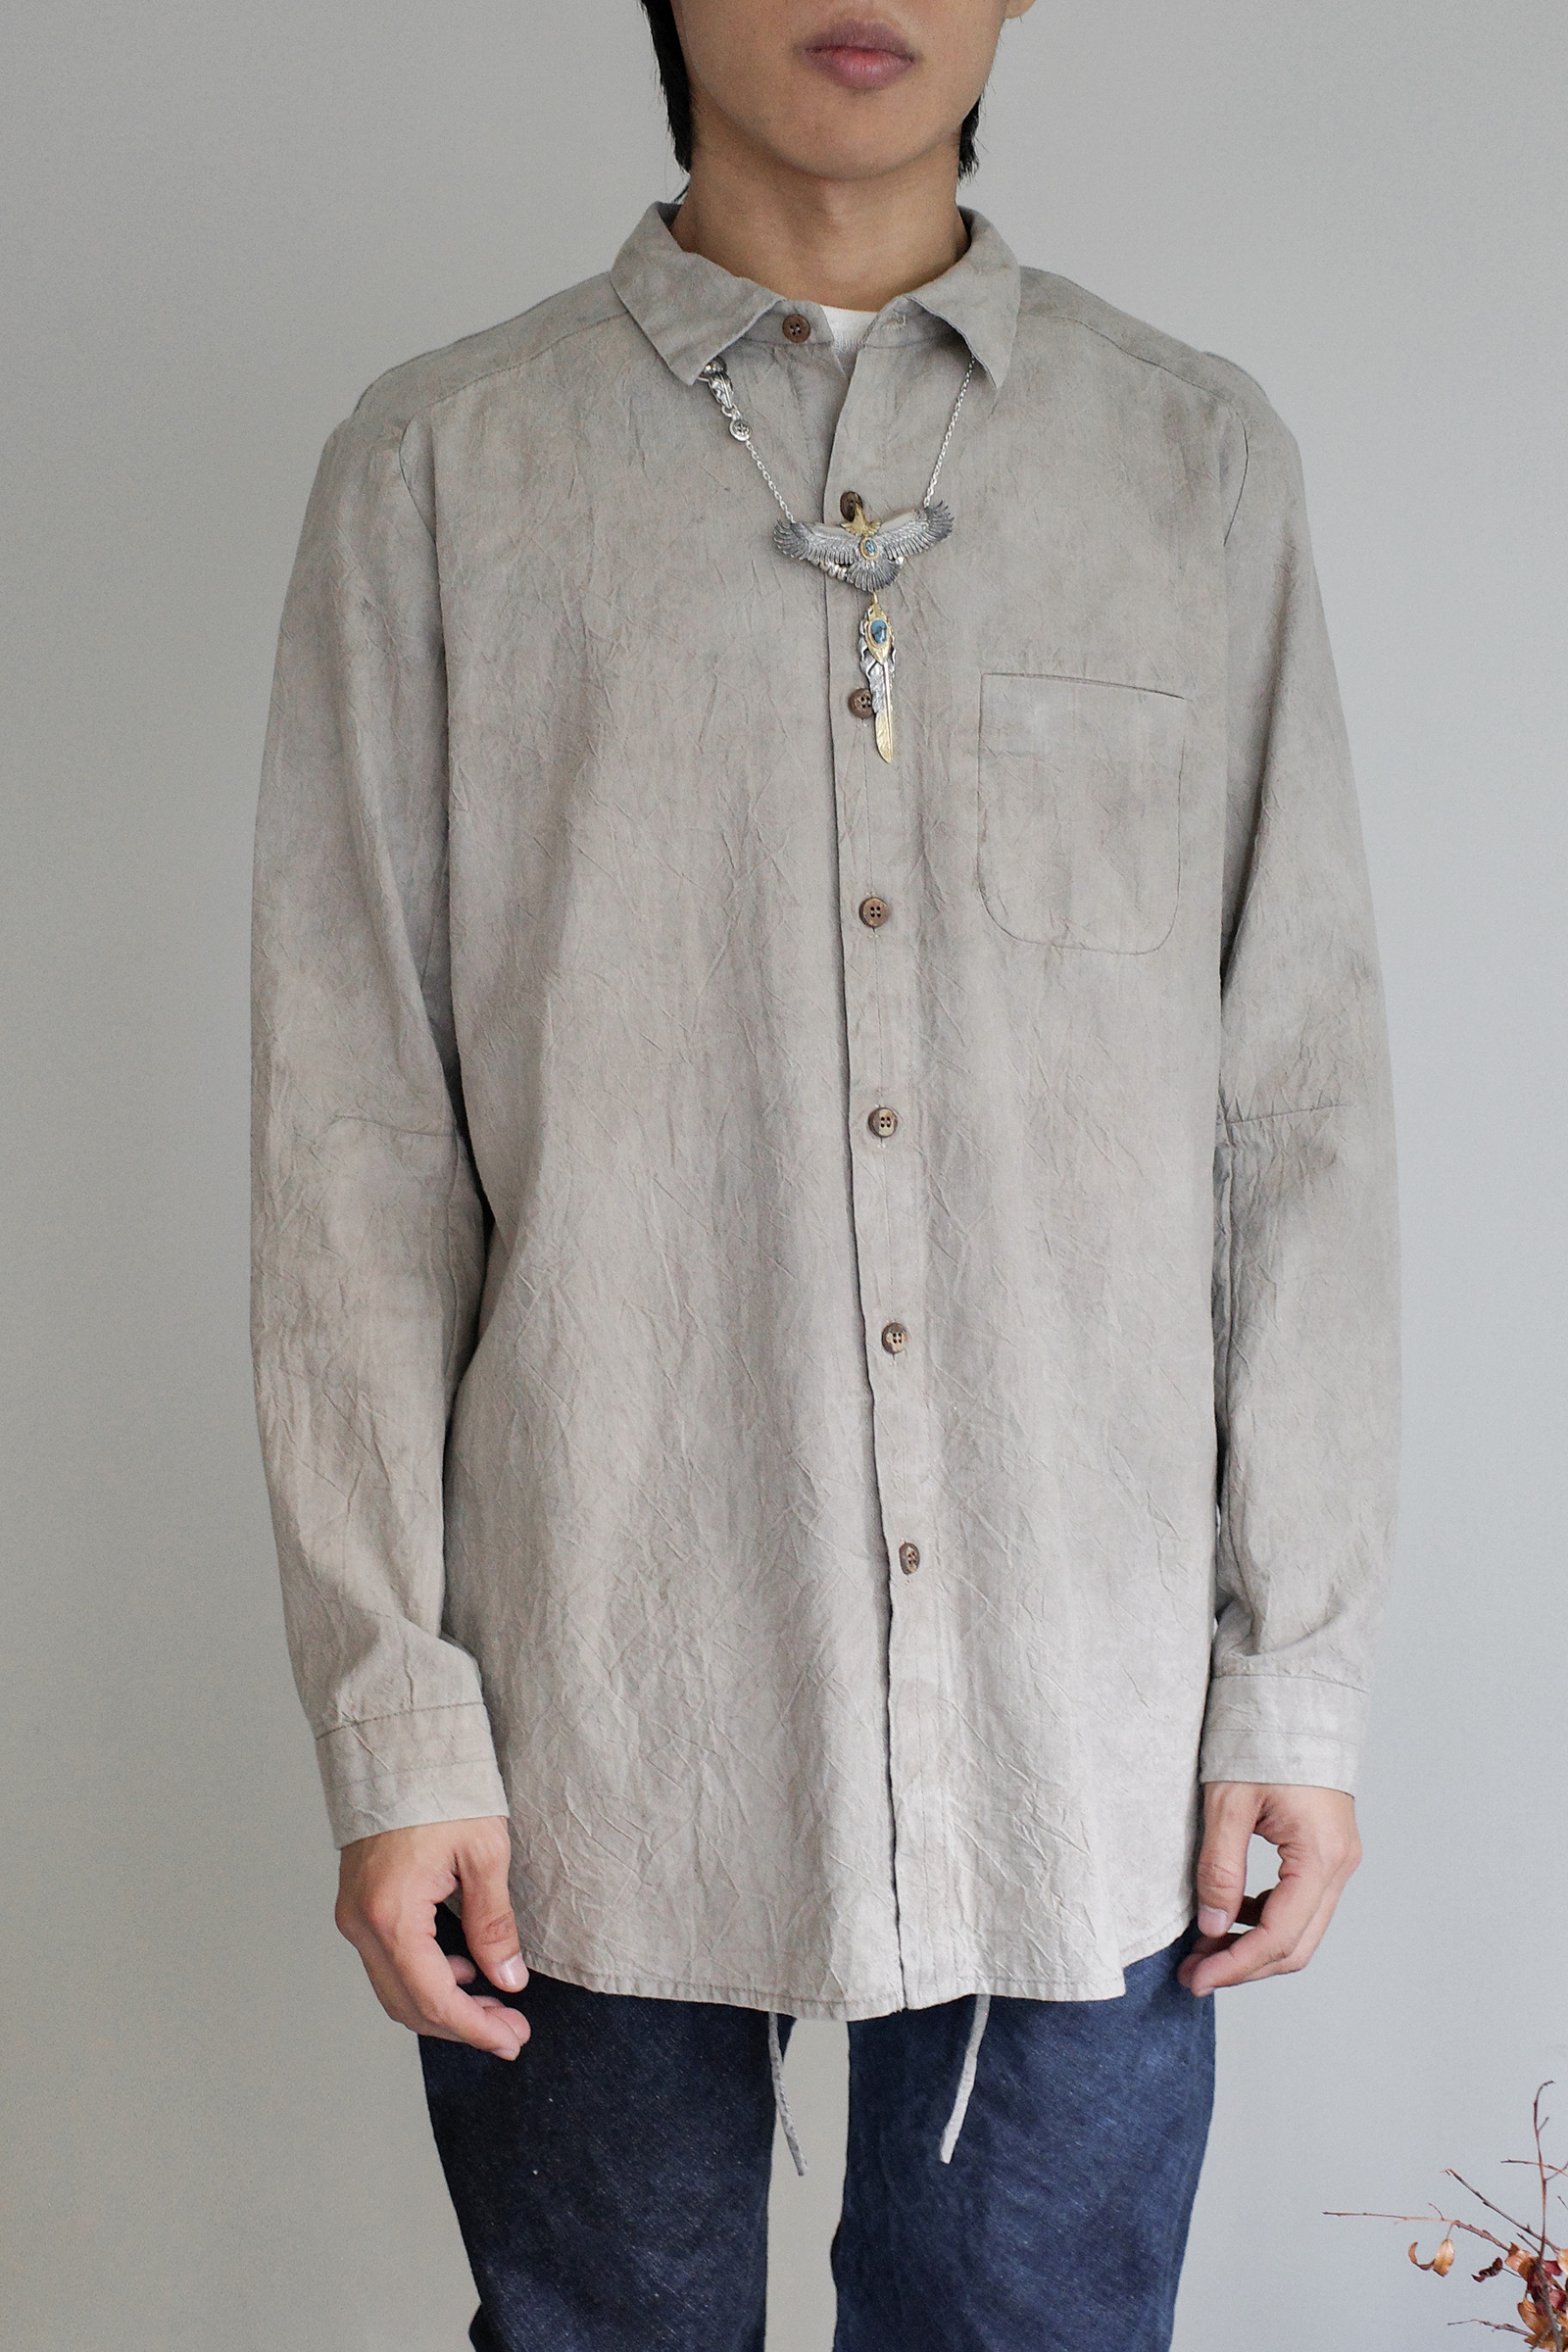 PROJECTbyH. "RADIENT" Washed Cotton Cloth Standard Minimalist Shirt